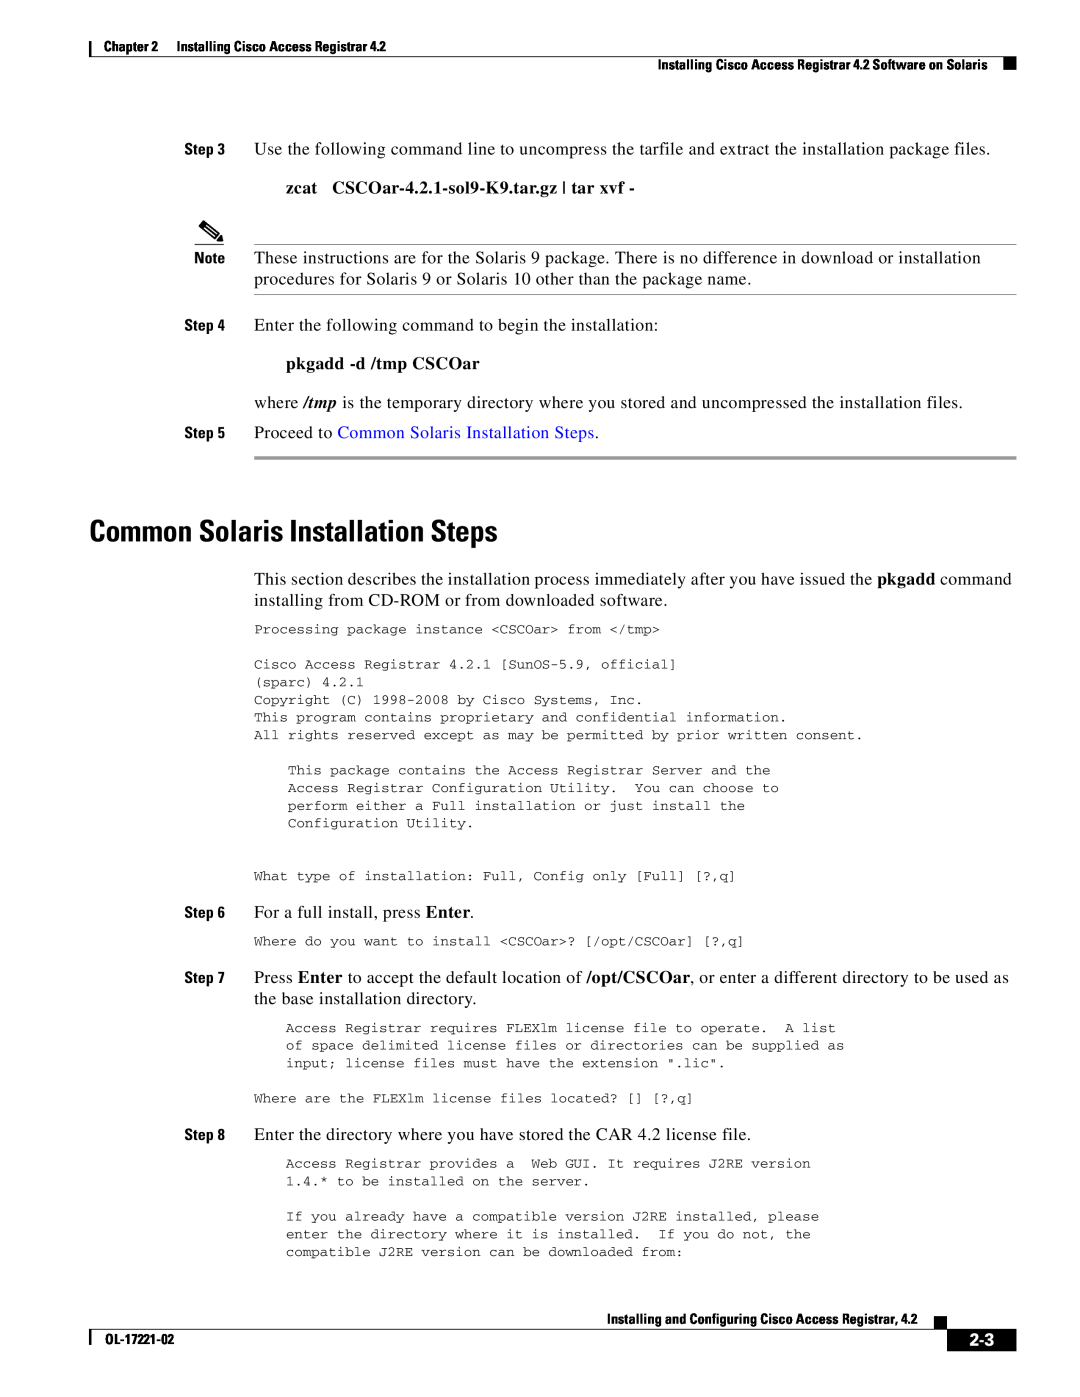 Cisco Systems manual Common Solaris Installation Steps, zcat CSCOar-4.2.1-sol9-K9.tar.gz tar xvf, pkgadd -d /tmp CSCOar 